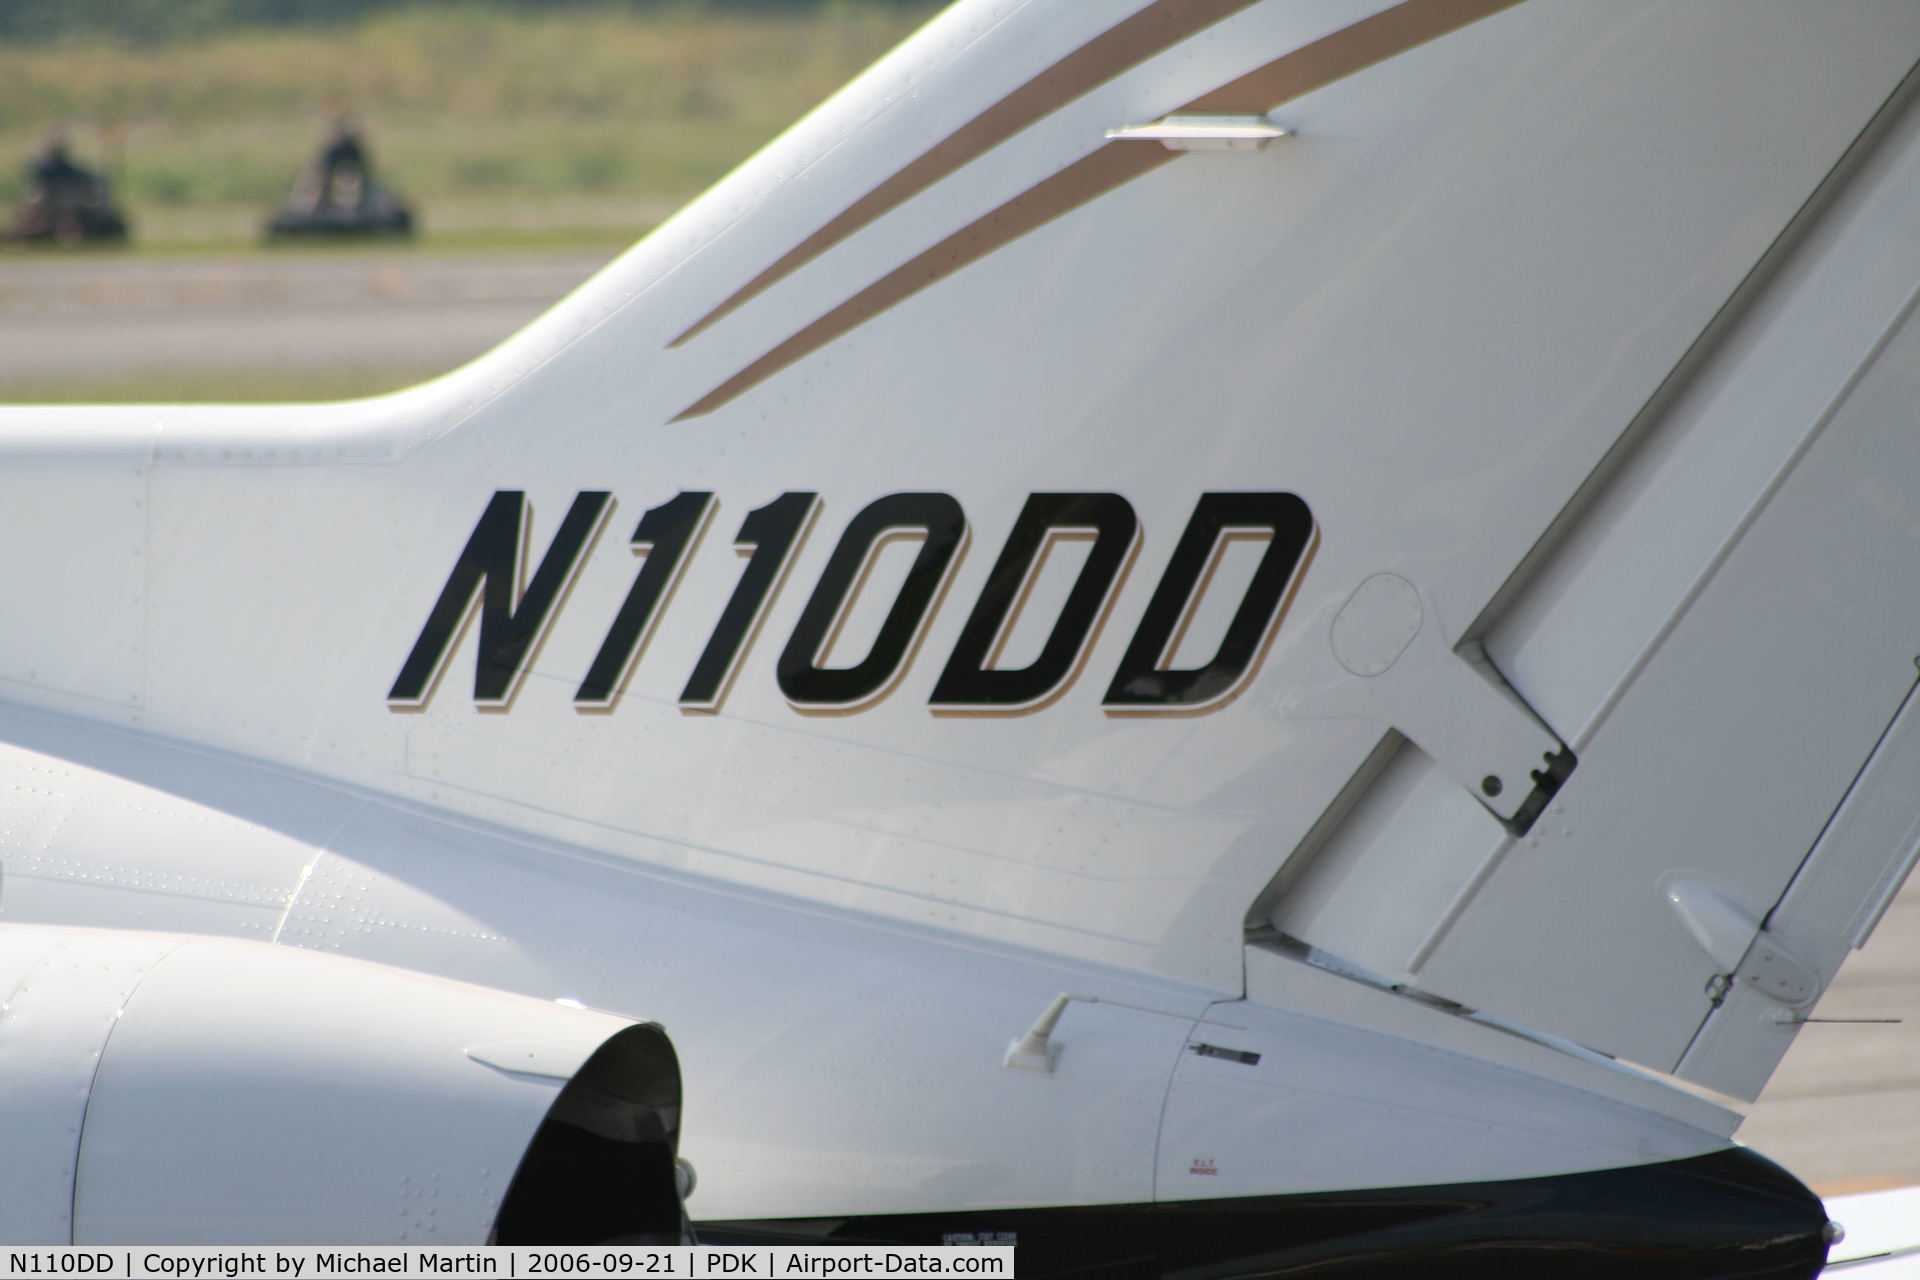 N110DD, 2005 Raytheon Hawker 800XP C/N 258728, Tail Numbers